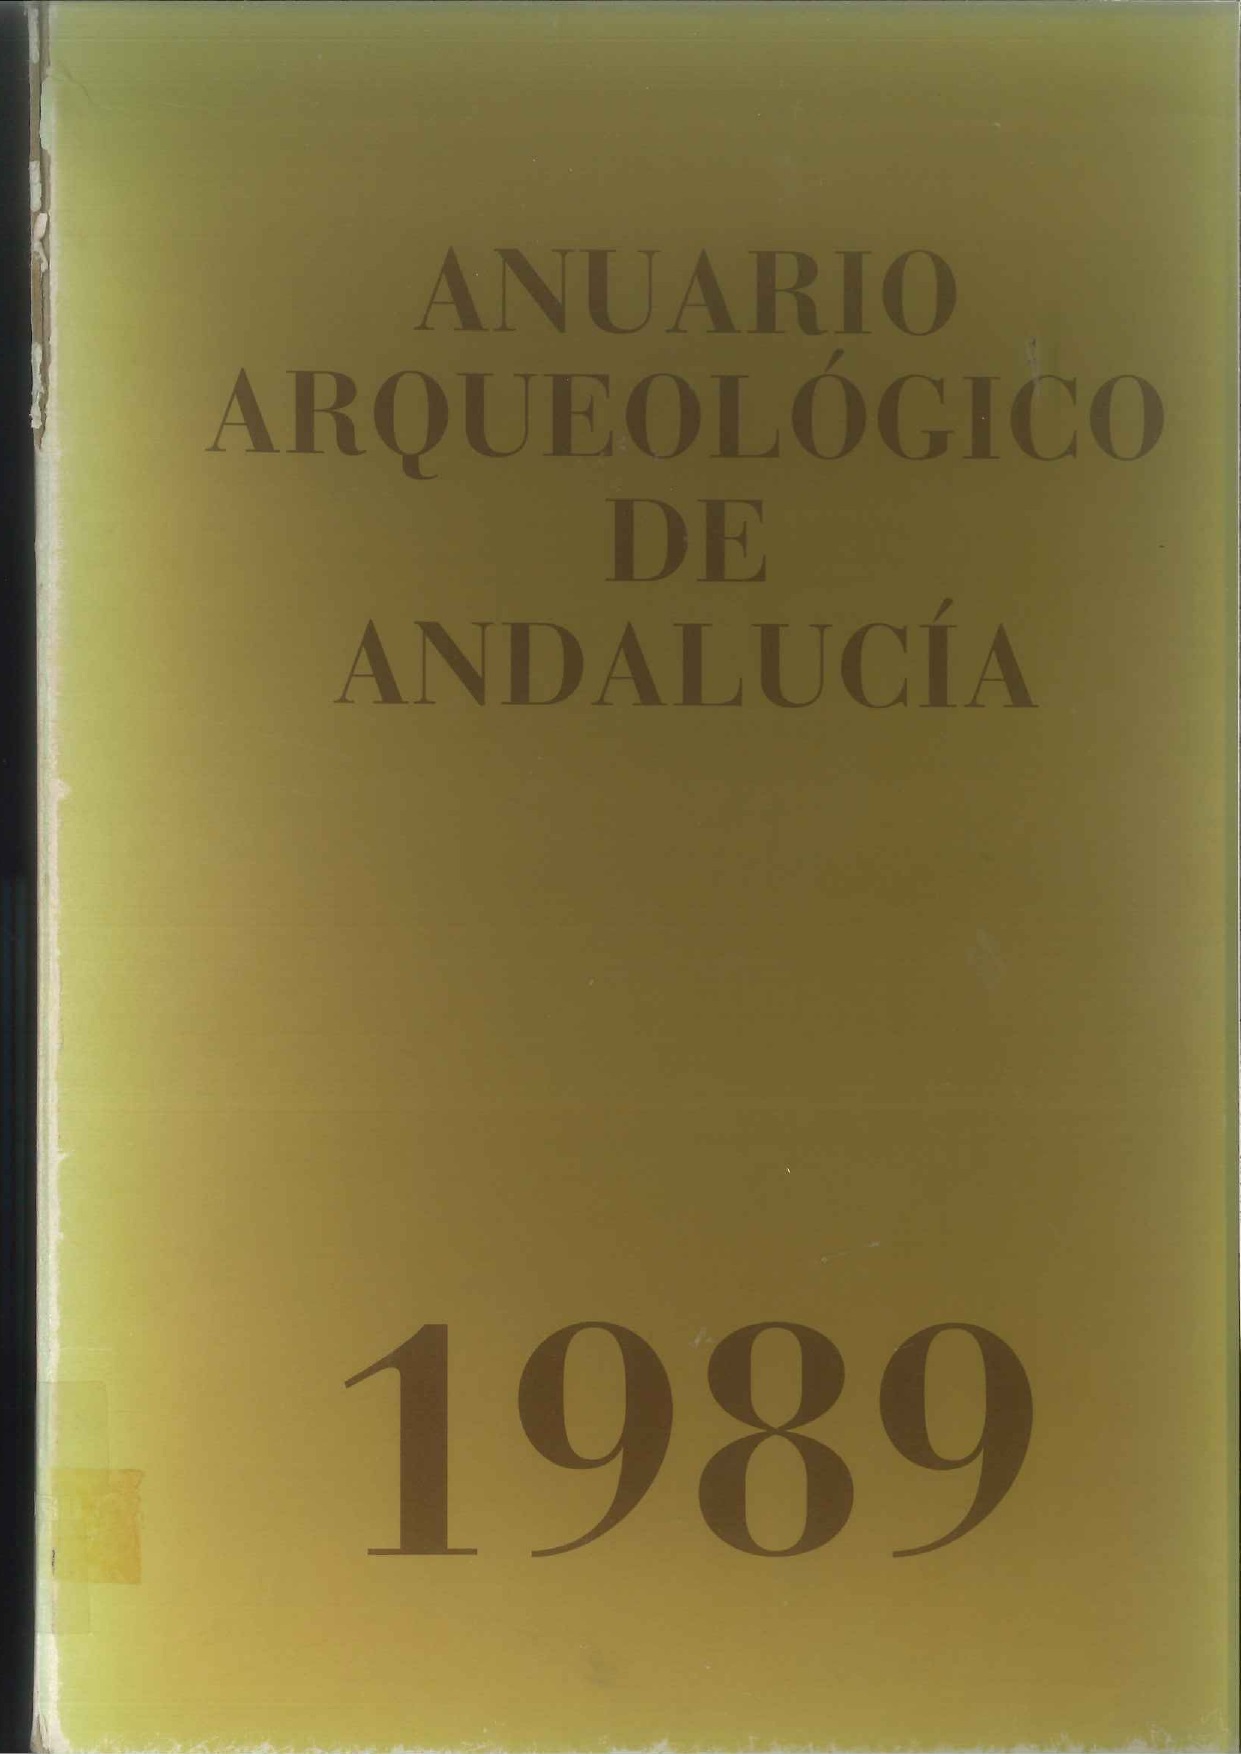 Imagen de portada del libro Anuario Arqueológico de Andalucía 1989